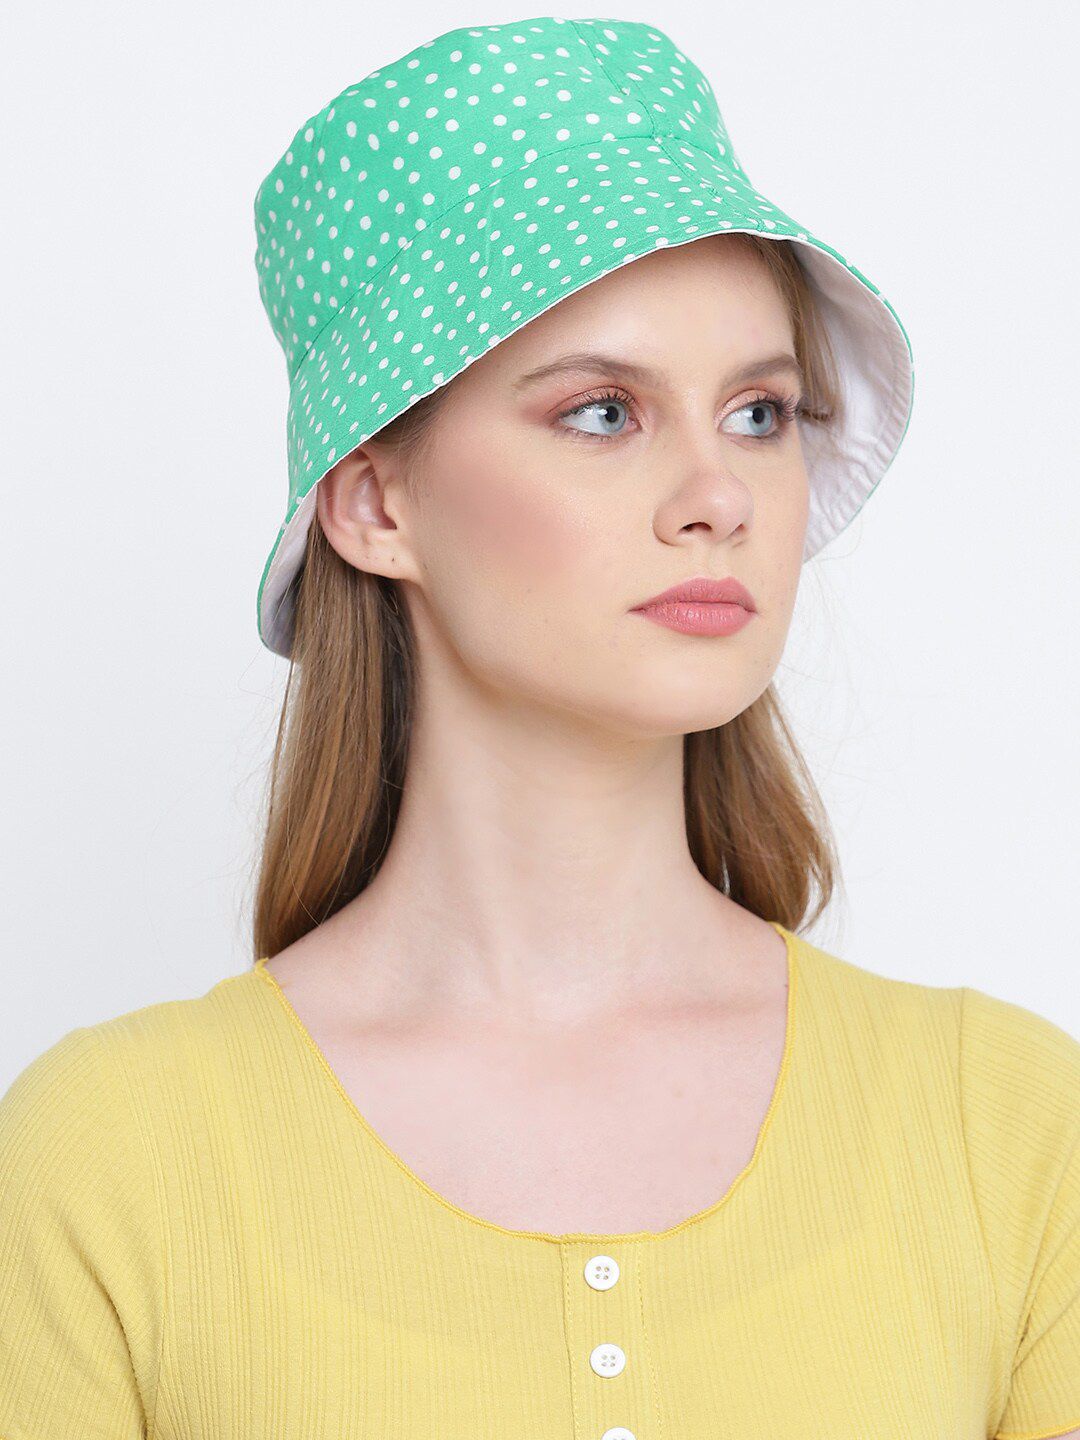 Oxolloxo Women Green & White Polka Dot Printed Reversible Sun Hat Price in India